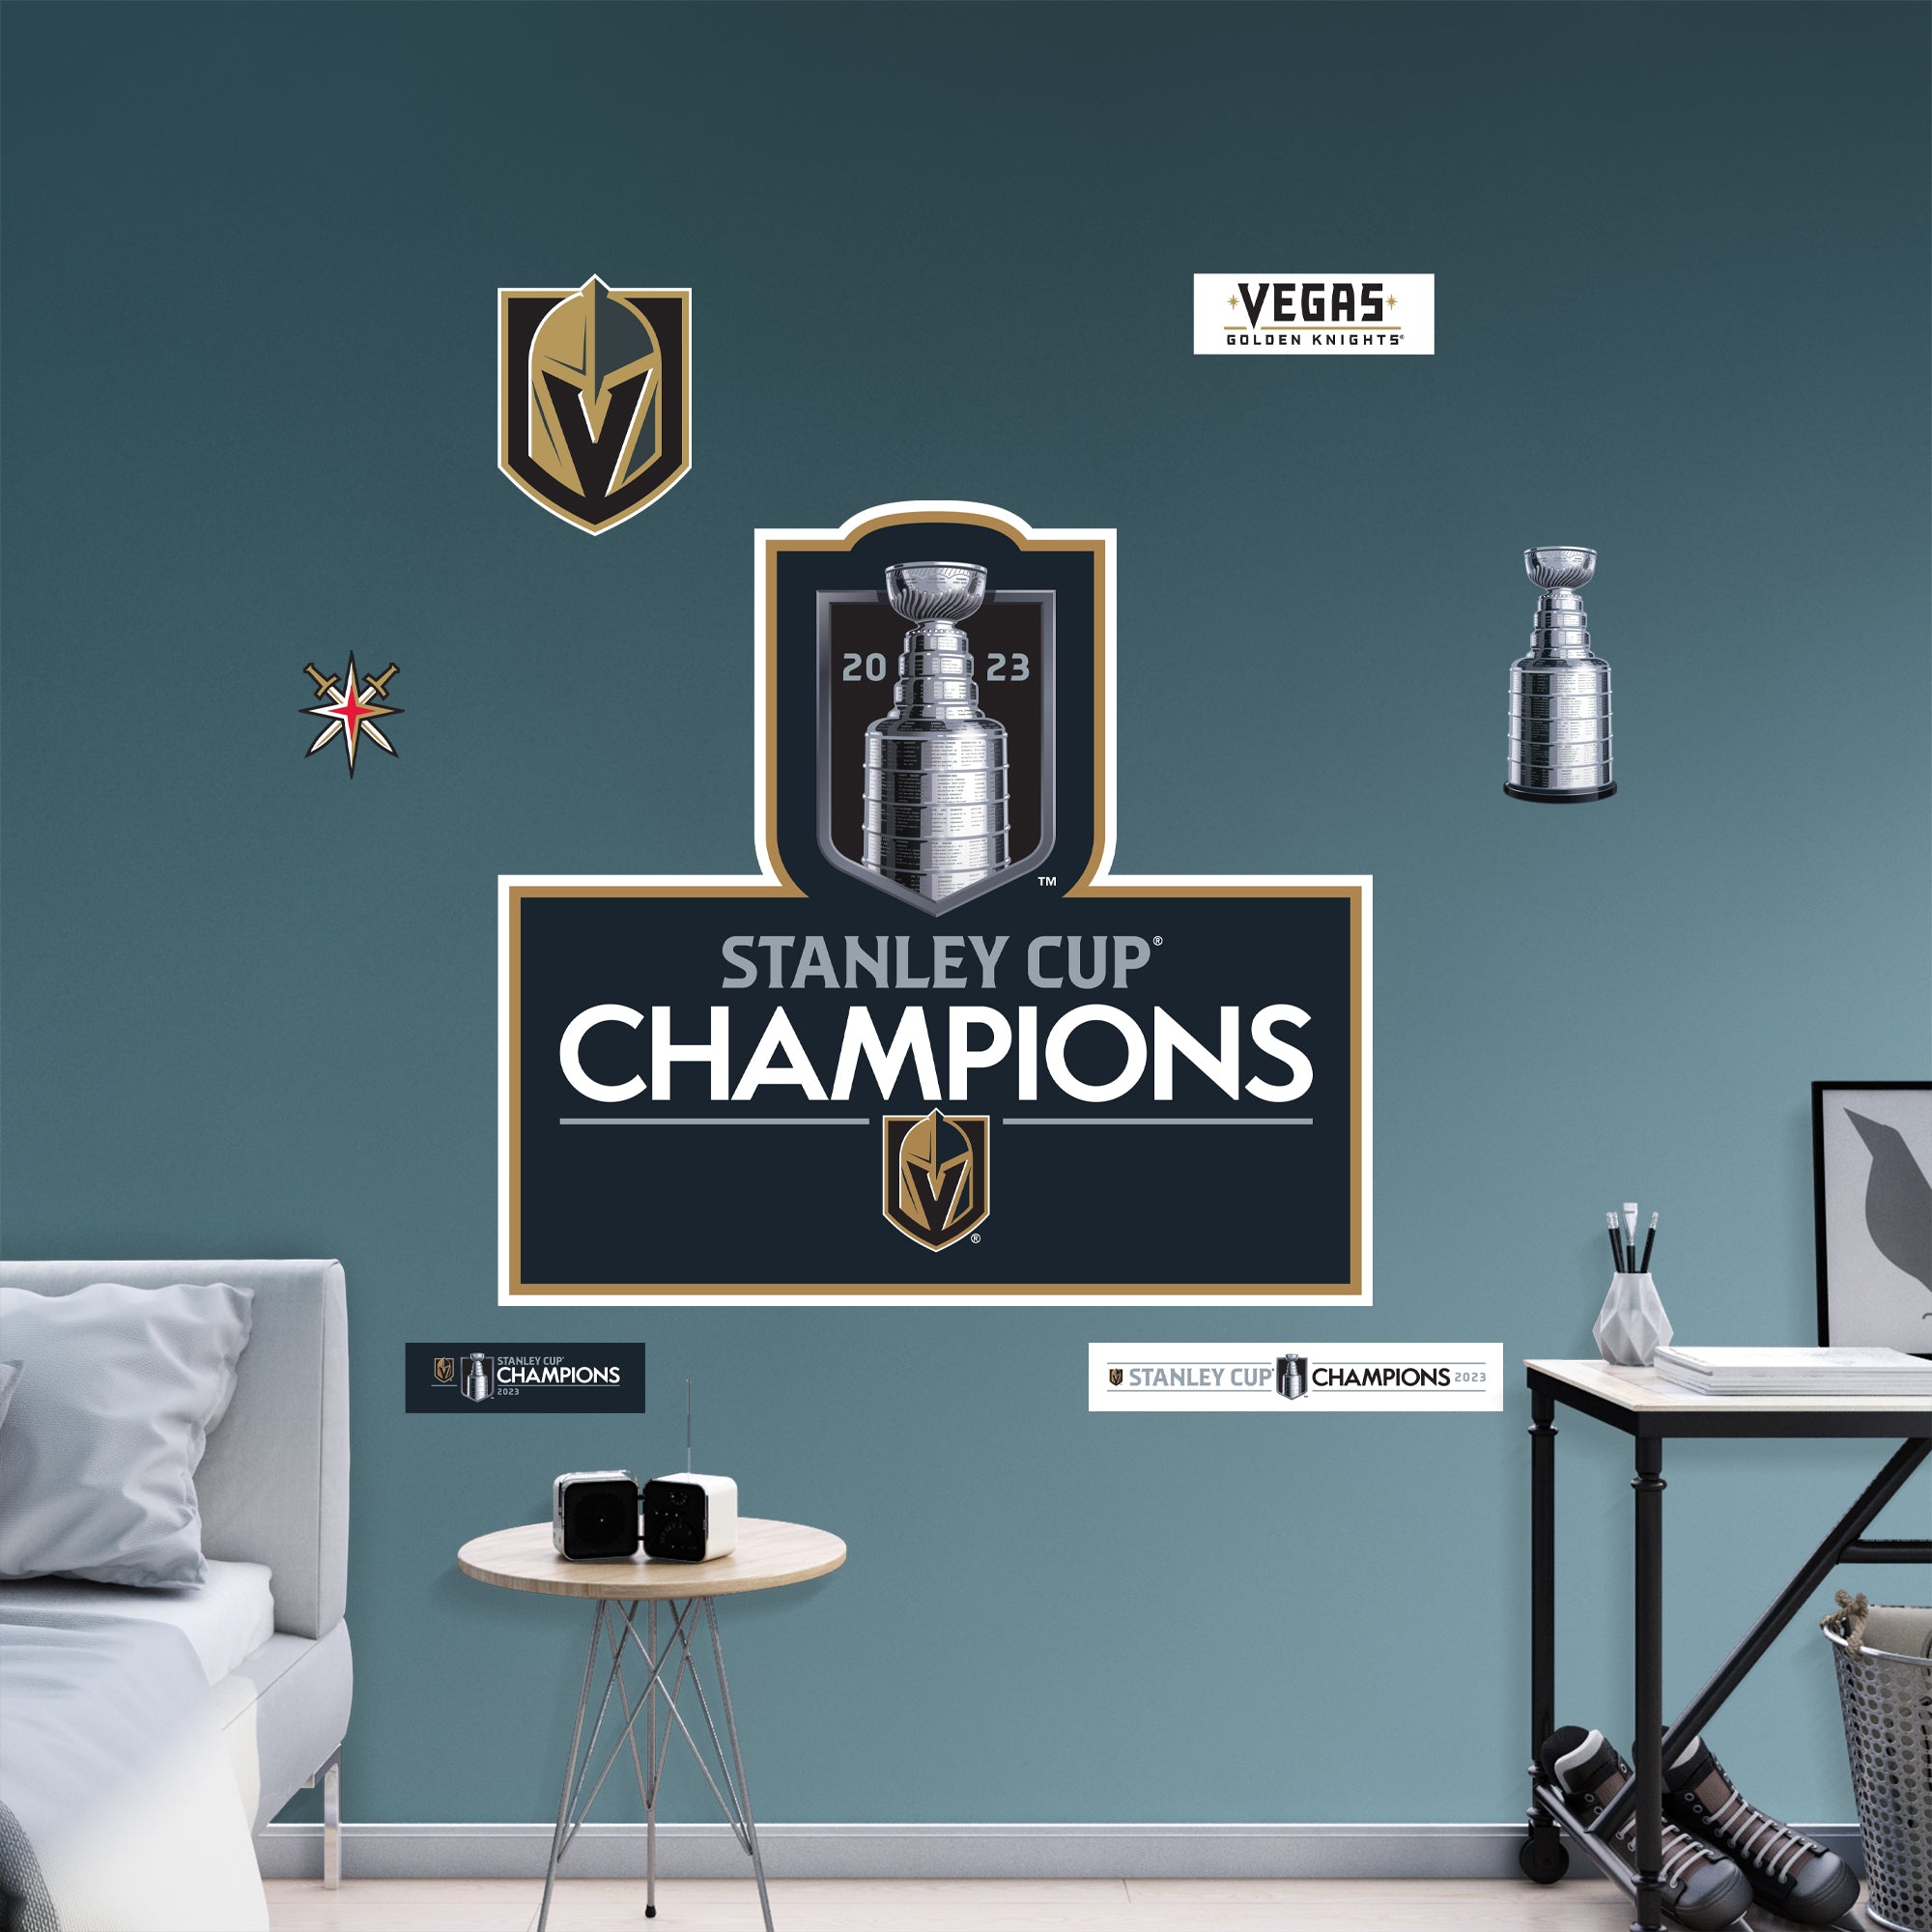 2023 Vegas Golden Knights Stanley Cup Champions Memorabilia